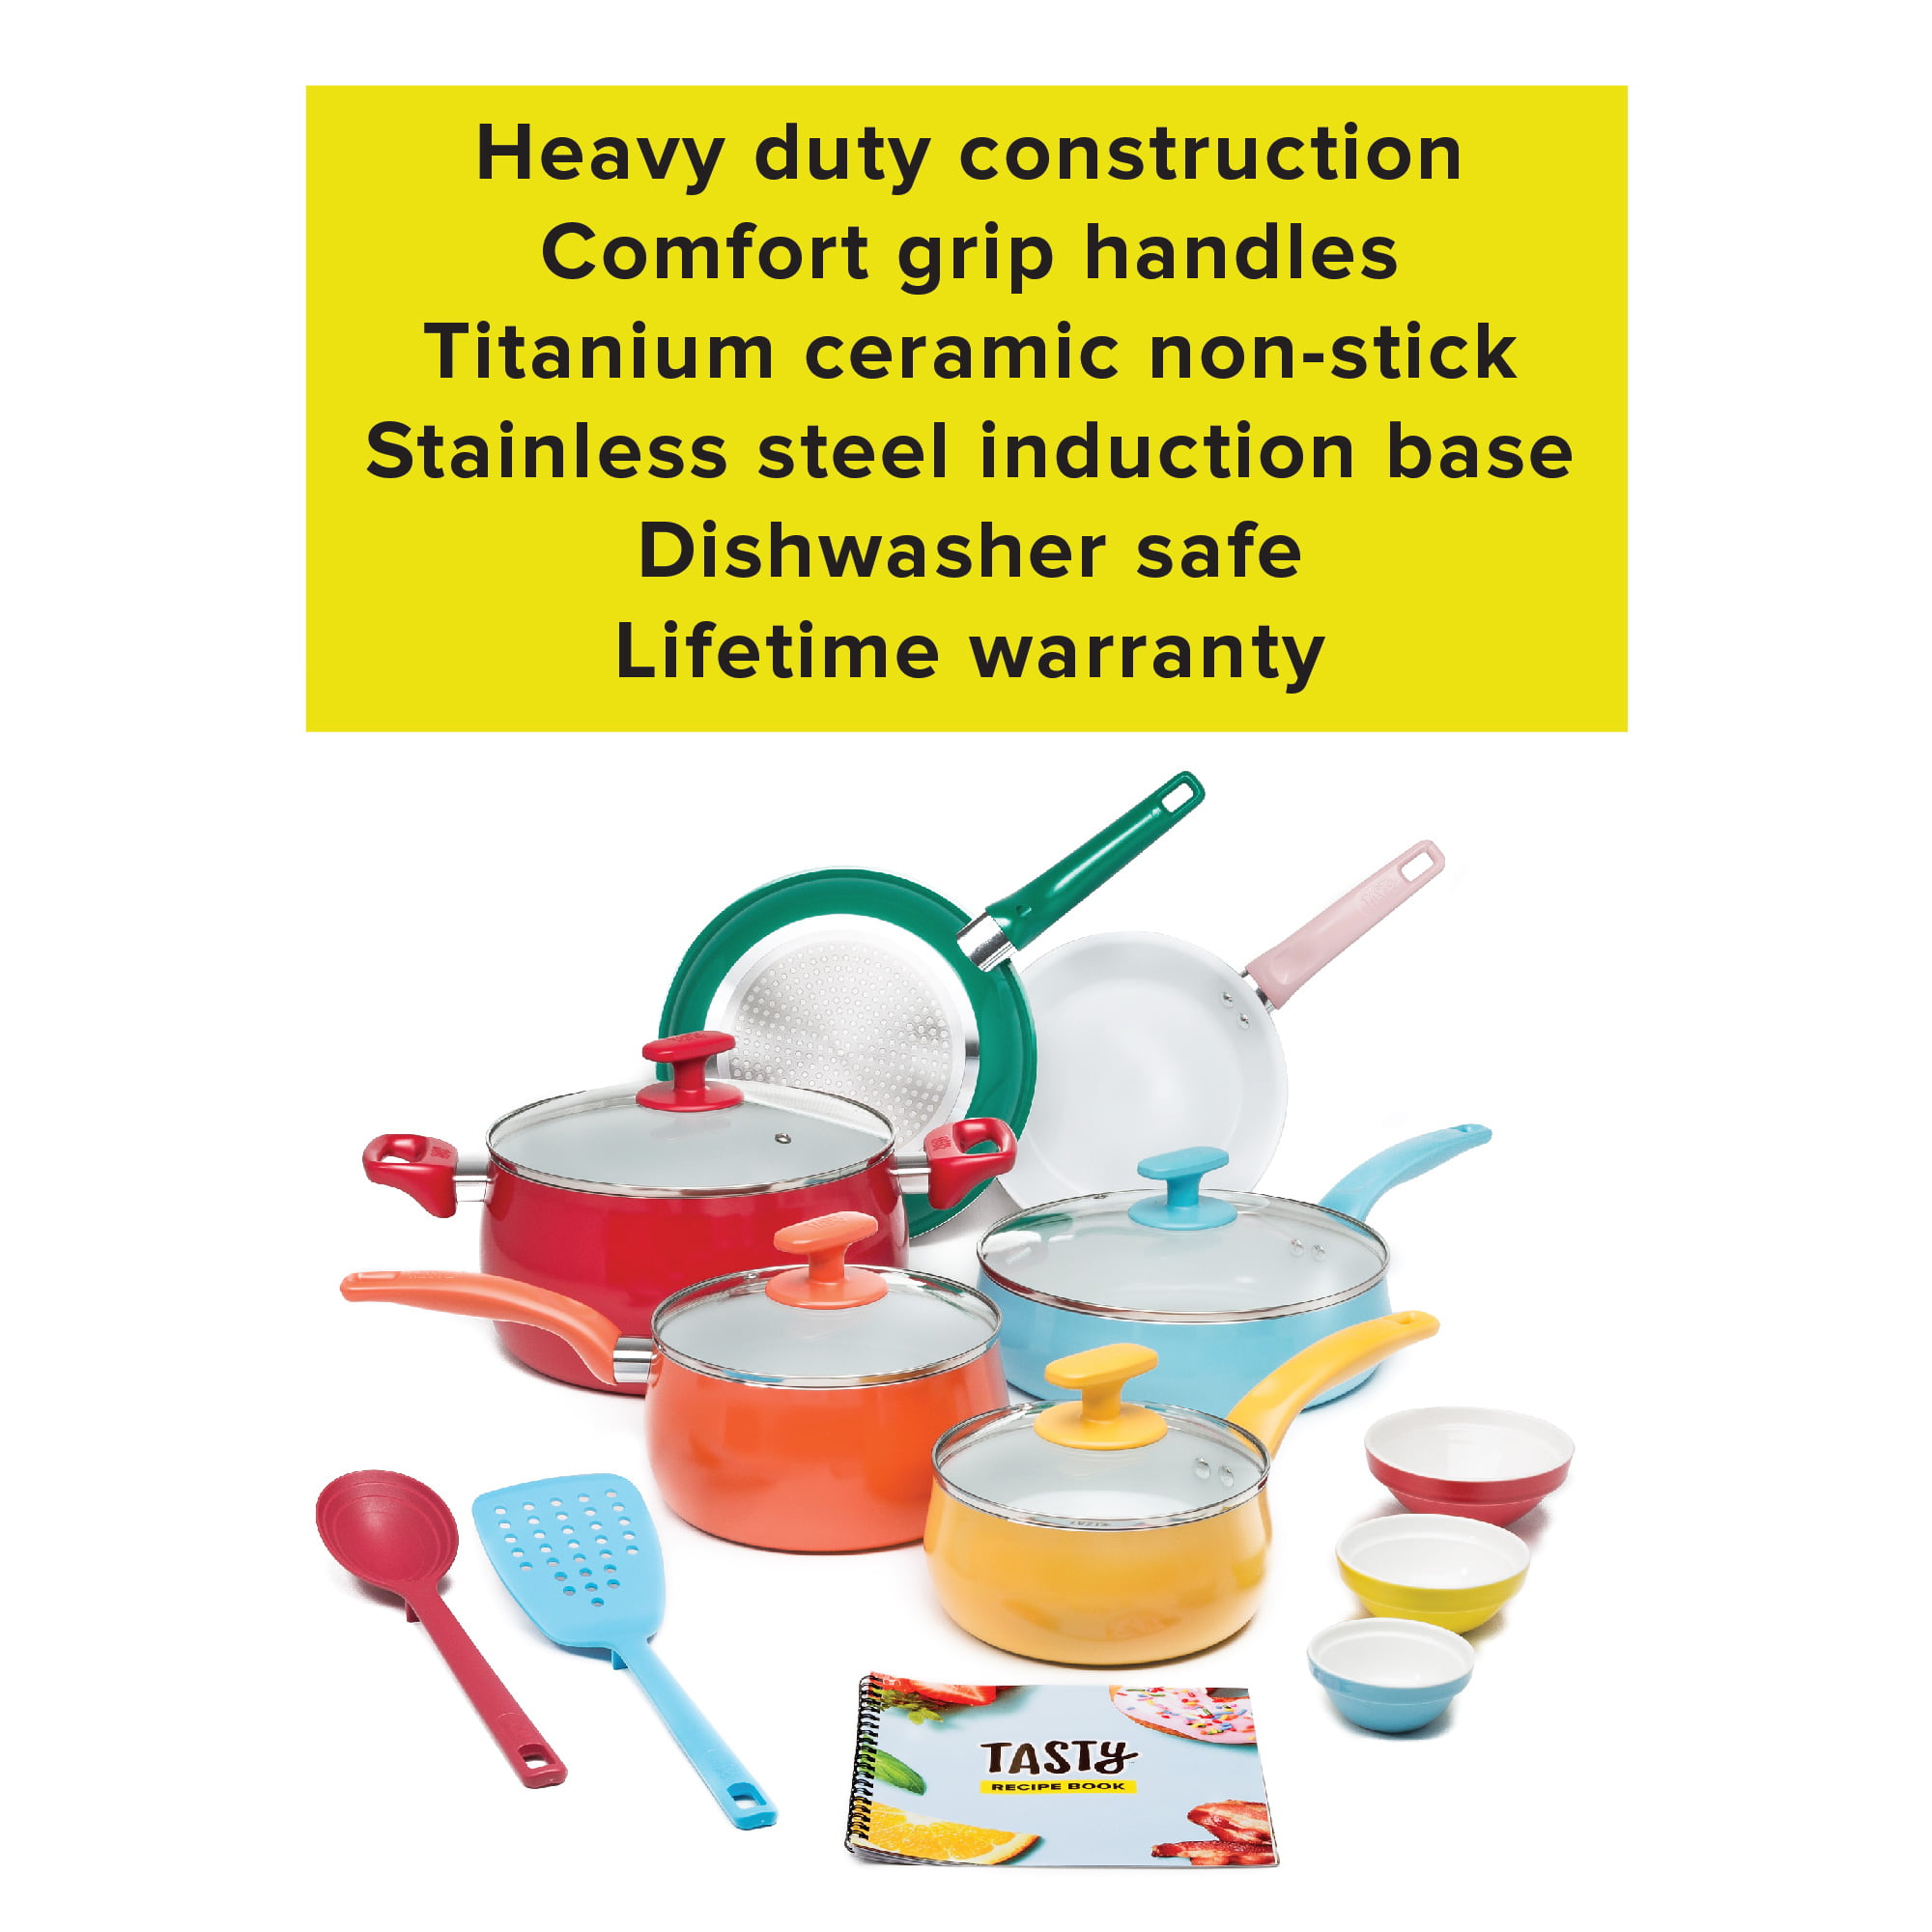 Tasty 30 Piece Heavyweight Non-Stick Ceramic Cookware Set - Includes Google  Home Mini